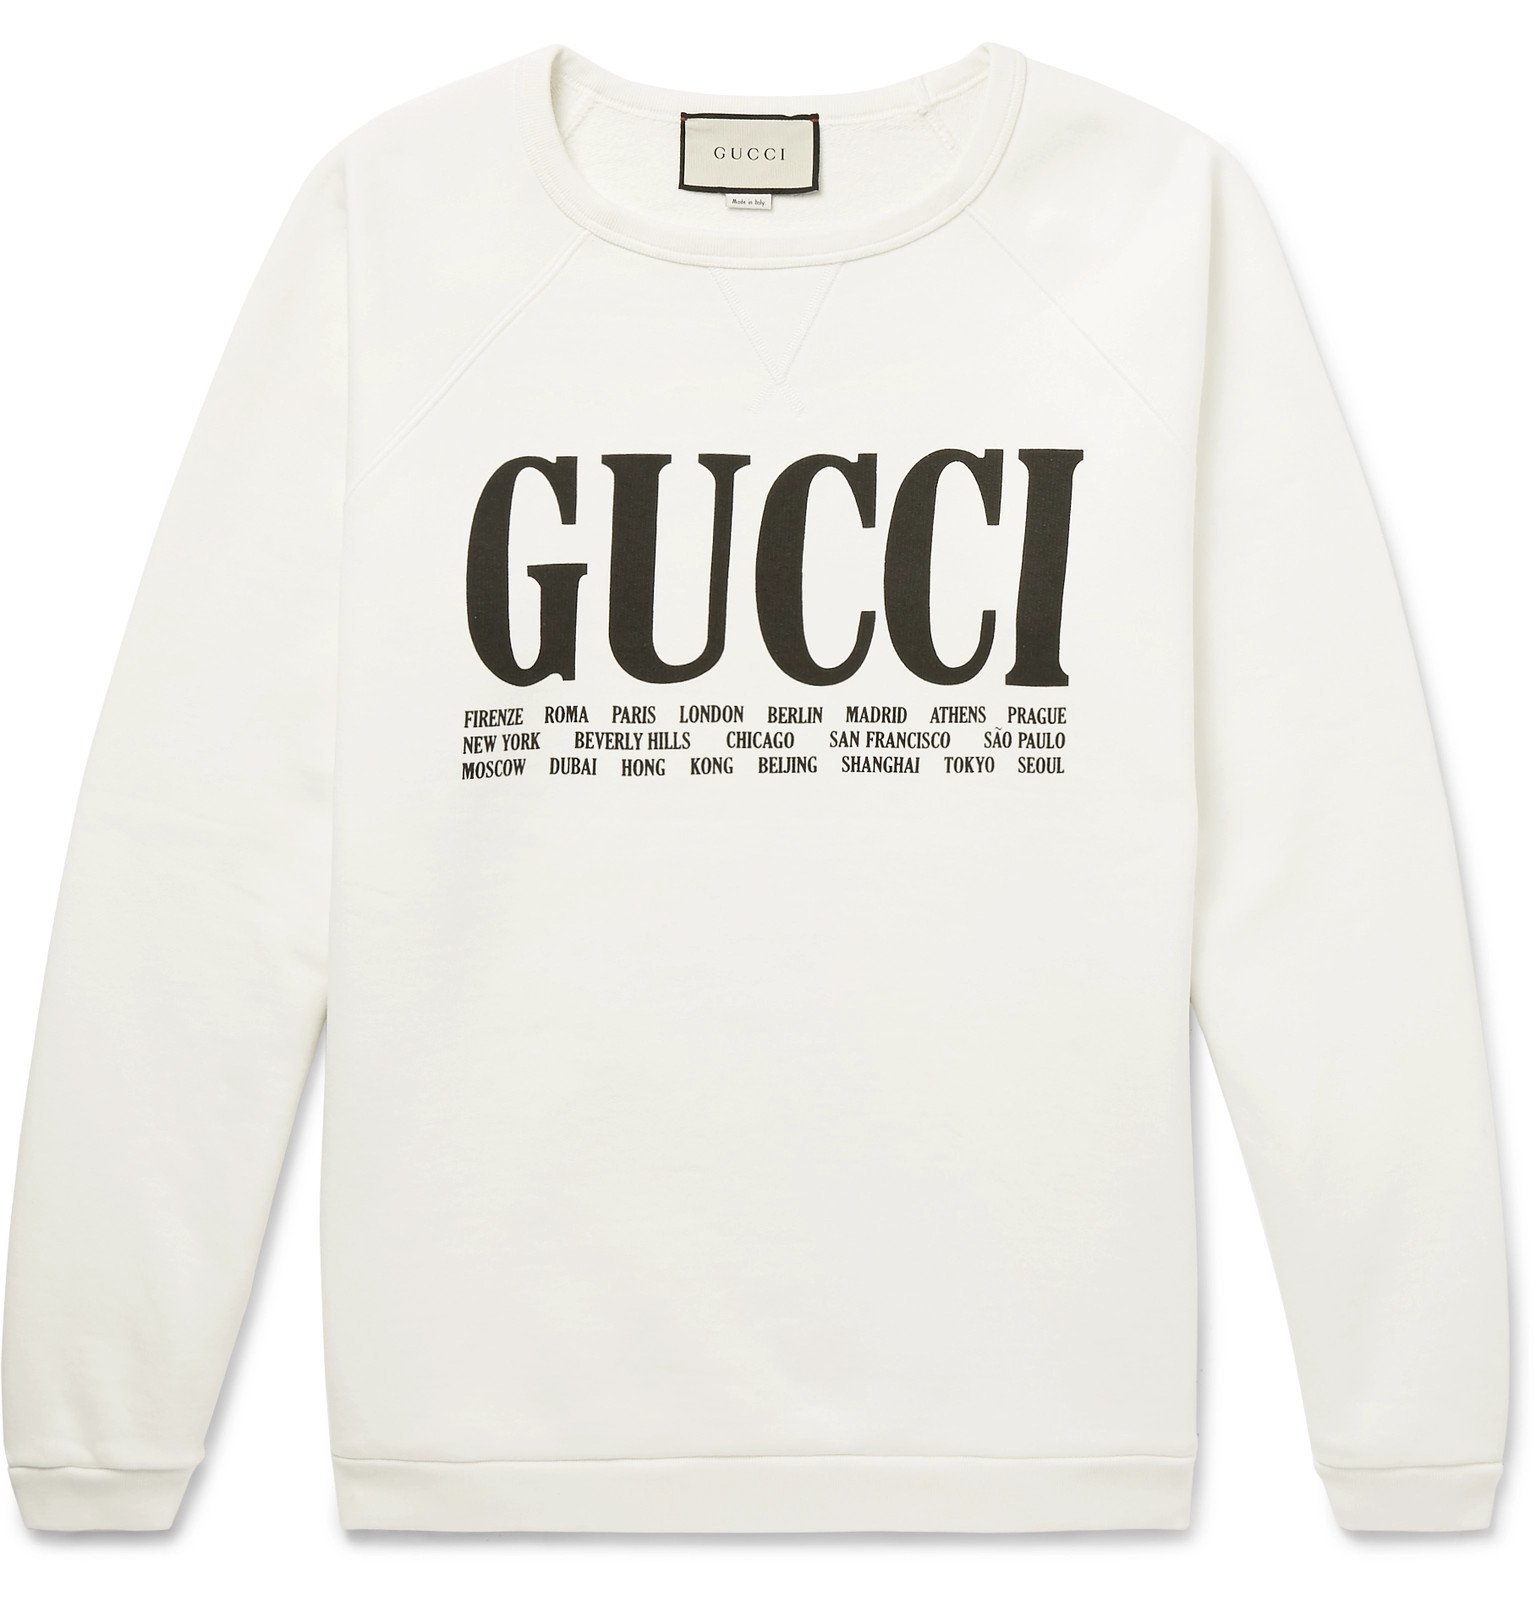 Gucci - Printed Cotton-Jersey Sweatshirt - White Gucci